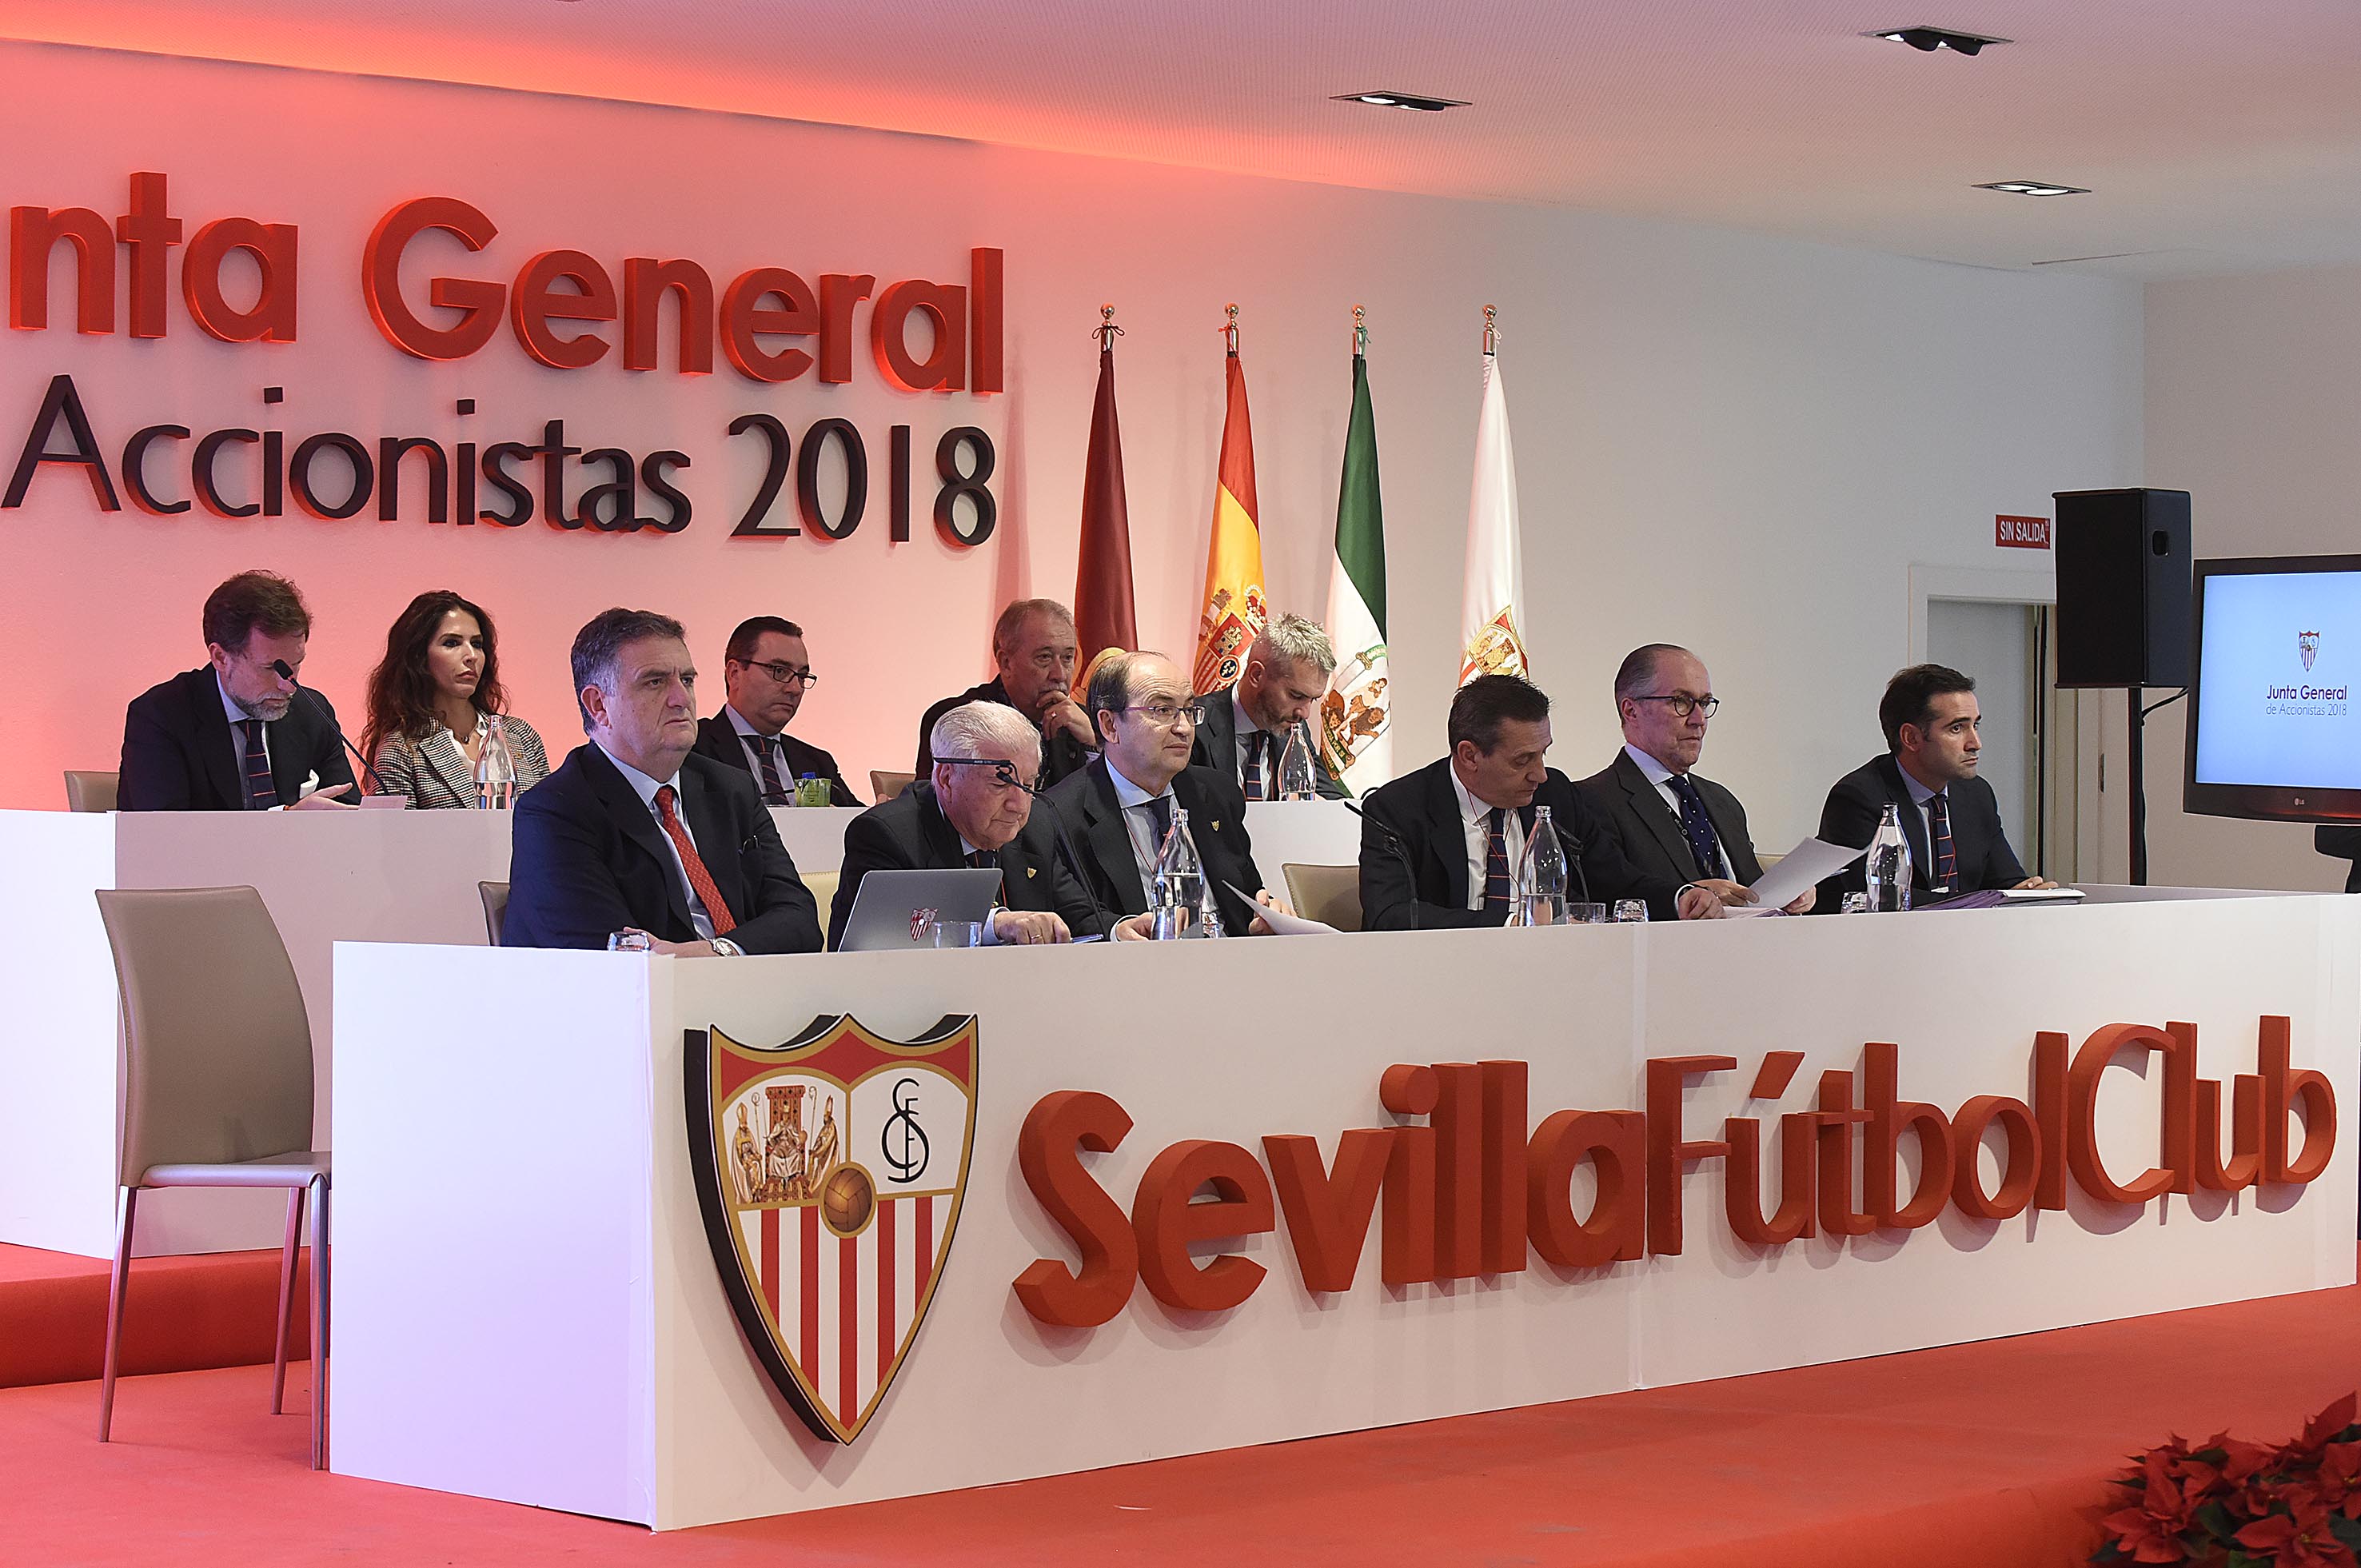 Junta General de Accionistas del Sevilla FC